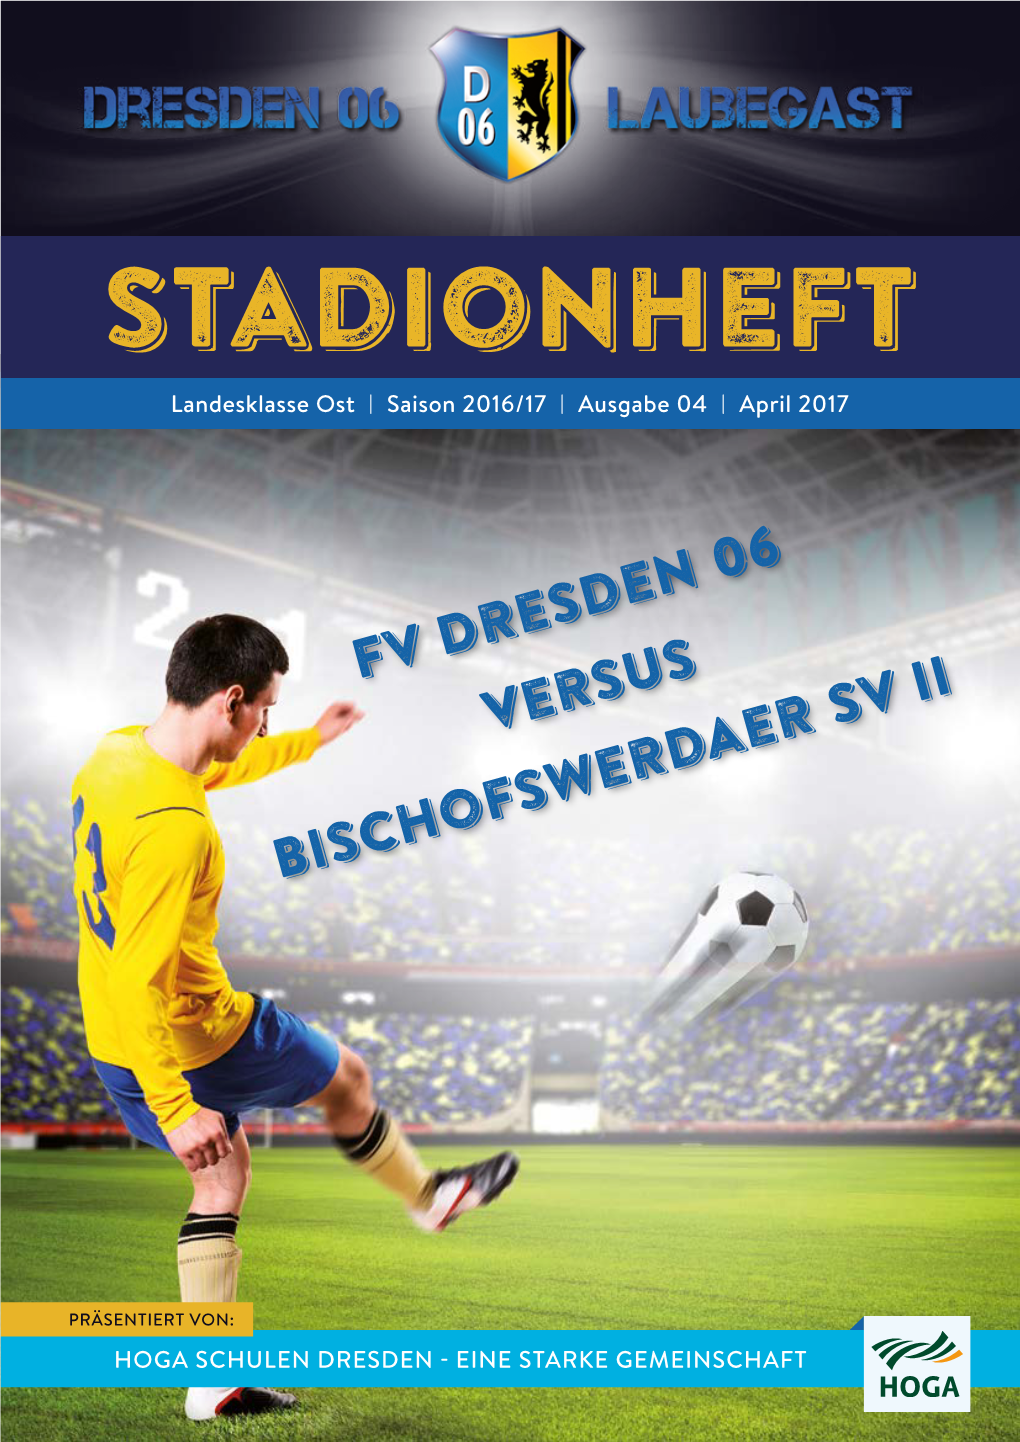 Stadionheft Landesklasse Ost | Saison 2016/17 | Ausgabe 04 | April 2017